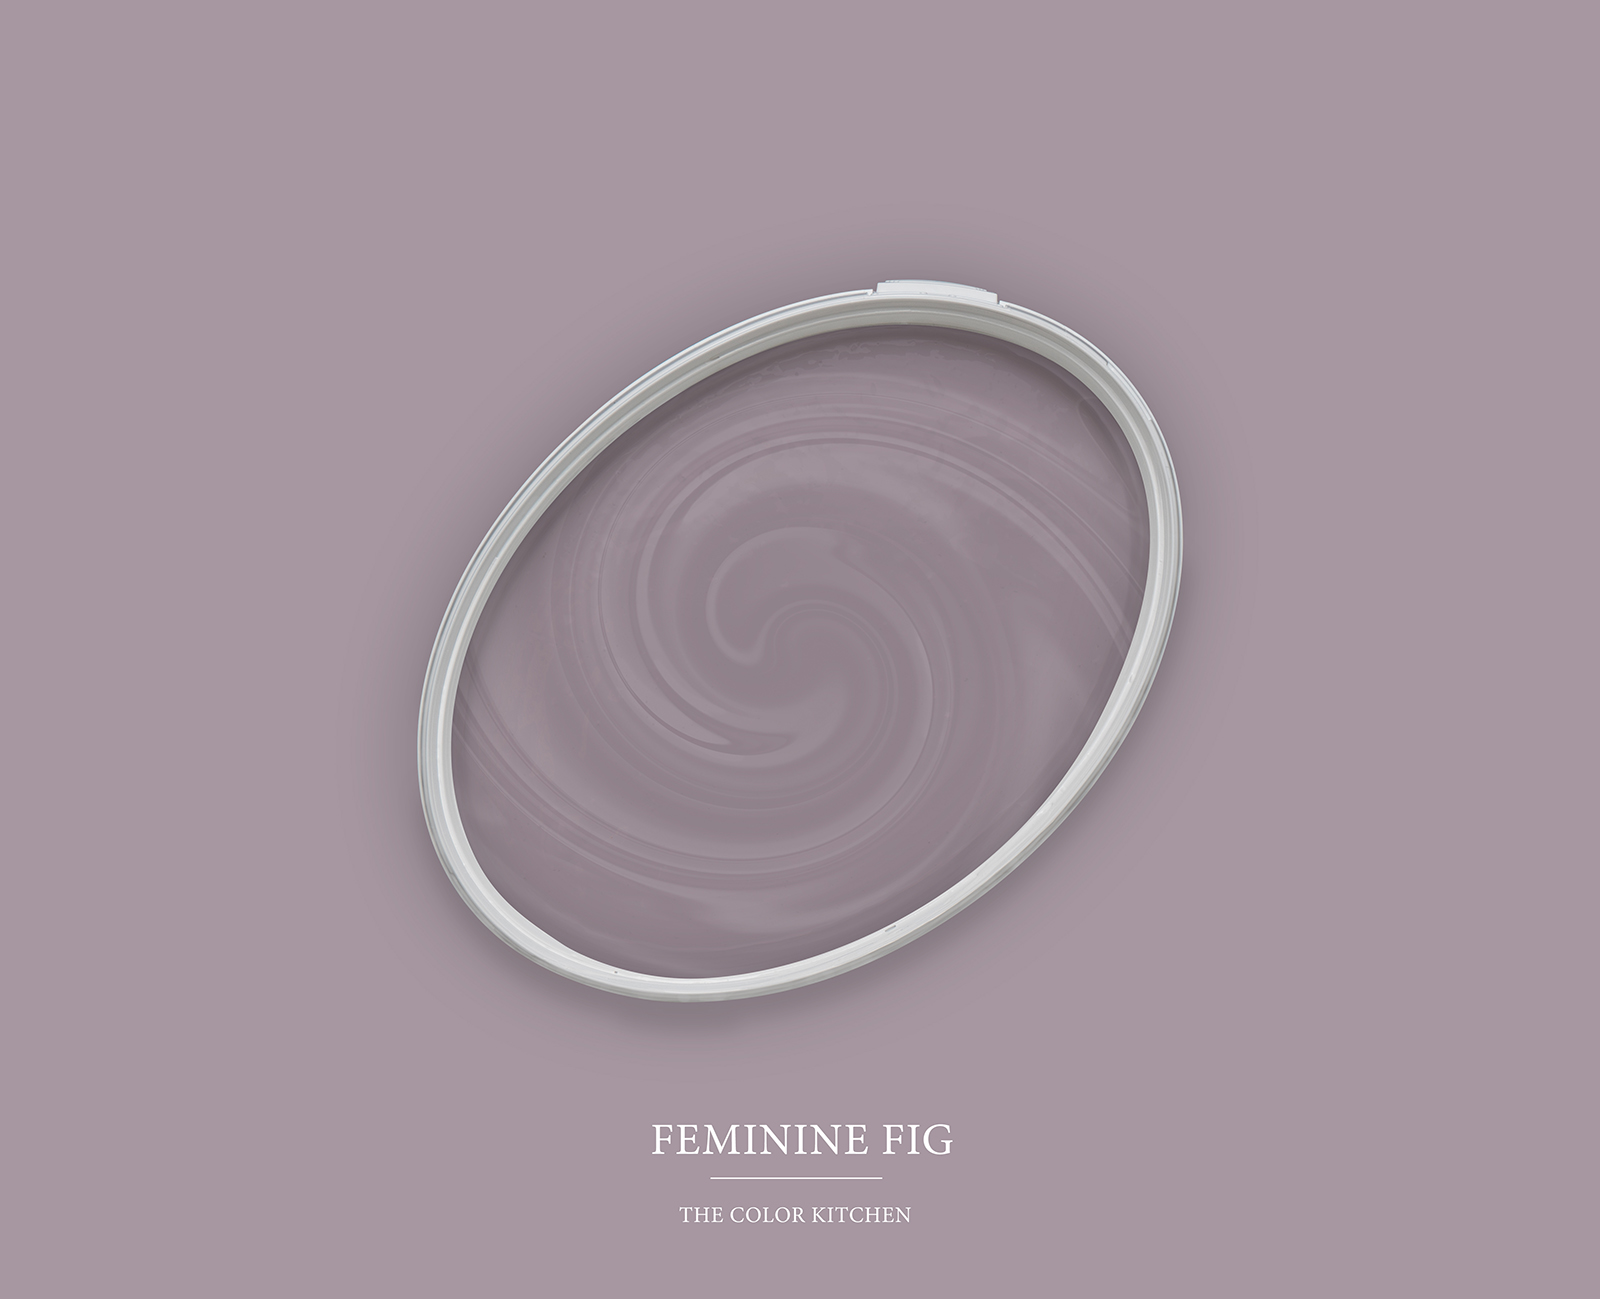 Wandfarbe in warmem Mauve »Feminine Fig« TCK2005 – 5 Liter
